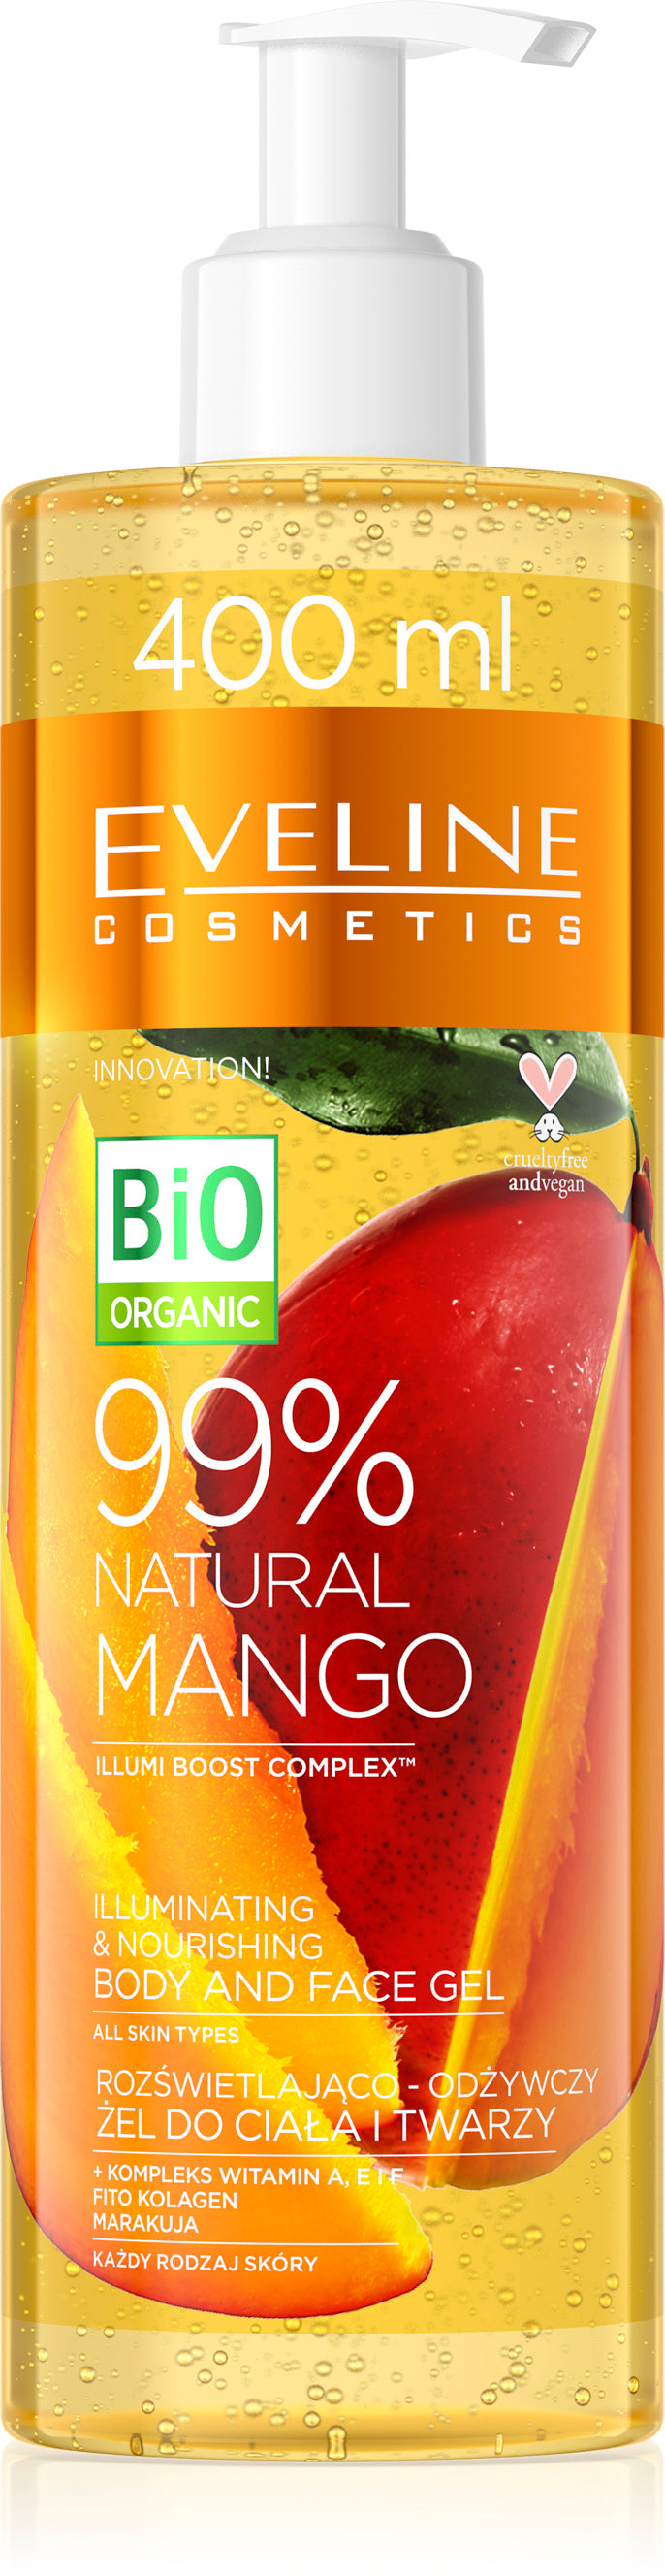 Eveline 99% natural mango body&face gel 400ml